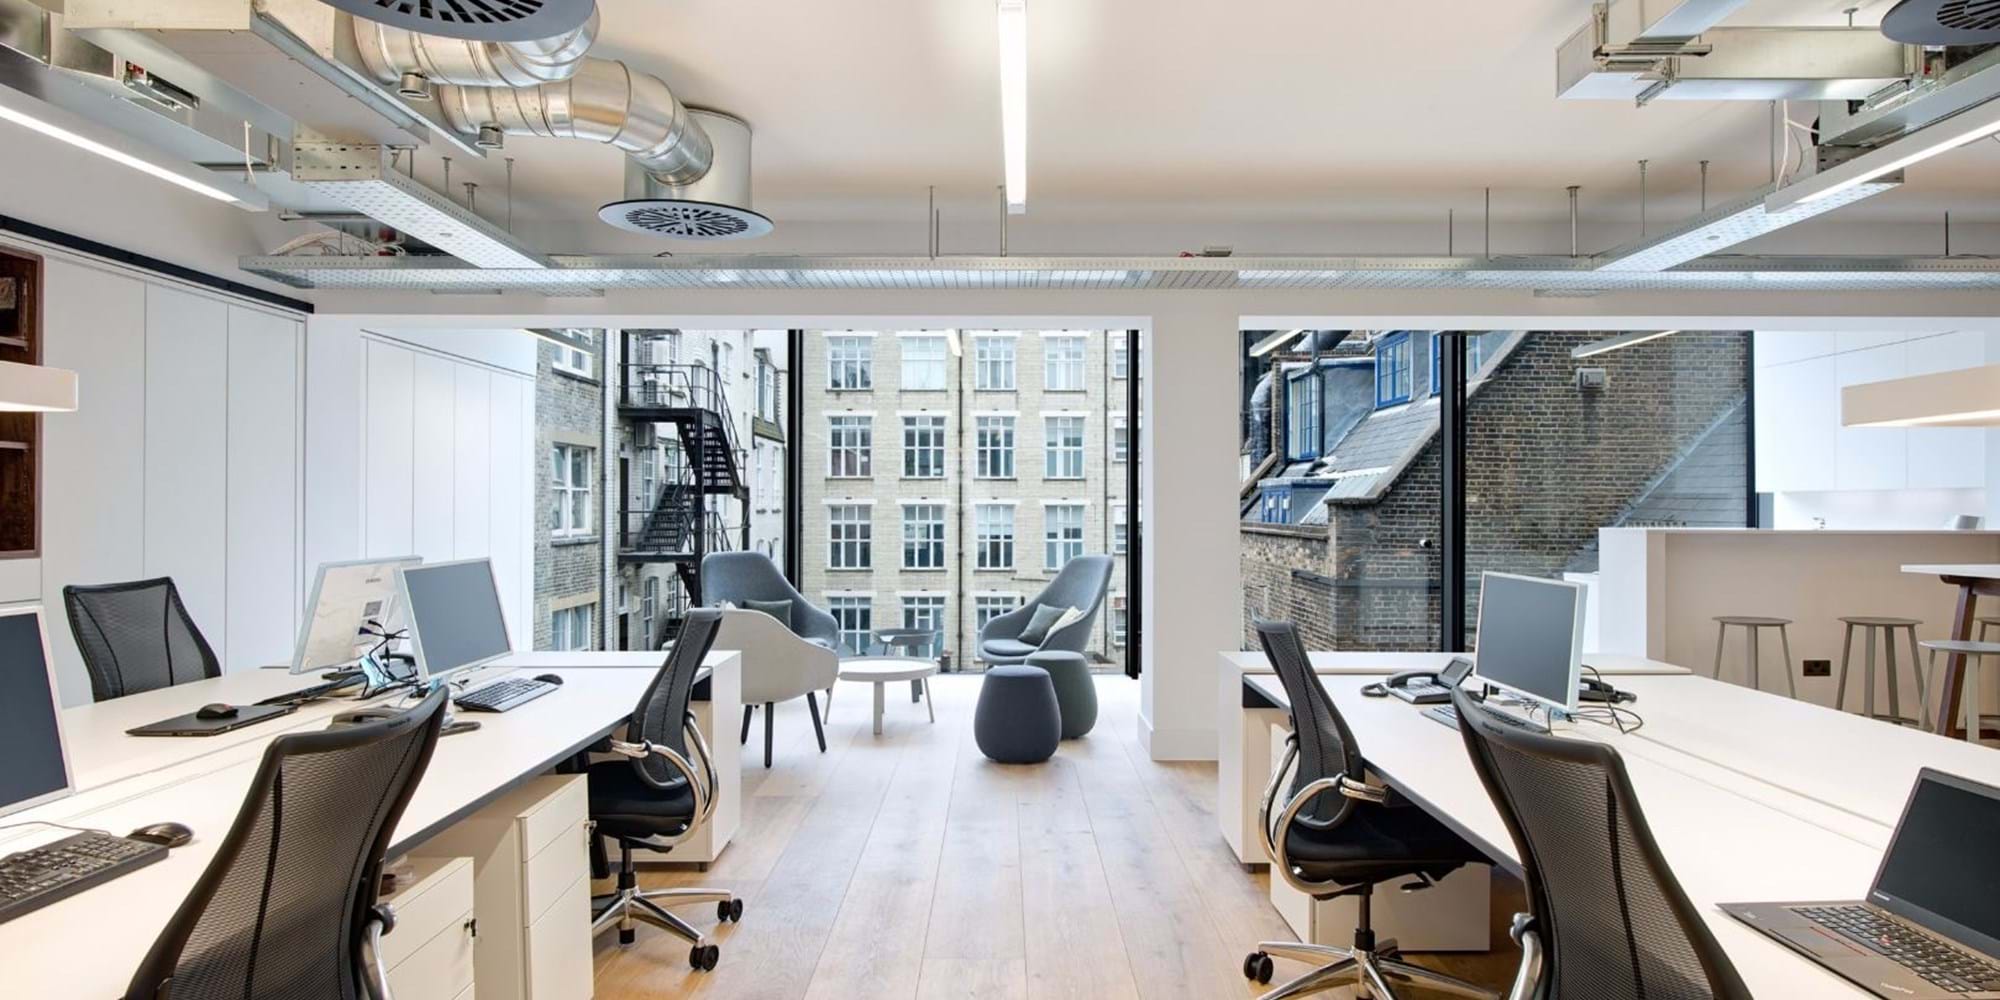 Modus Workspace office design, fit out and refurbishment - Craigewan - Graigewan 09 highres sRGB.jpg